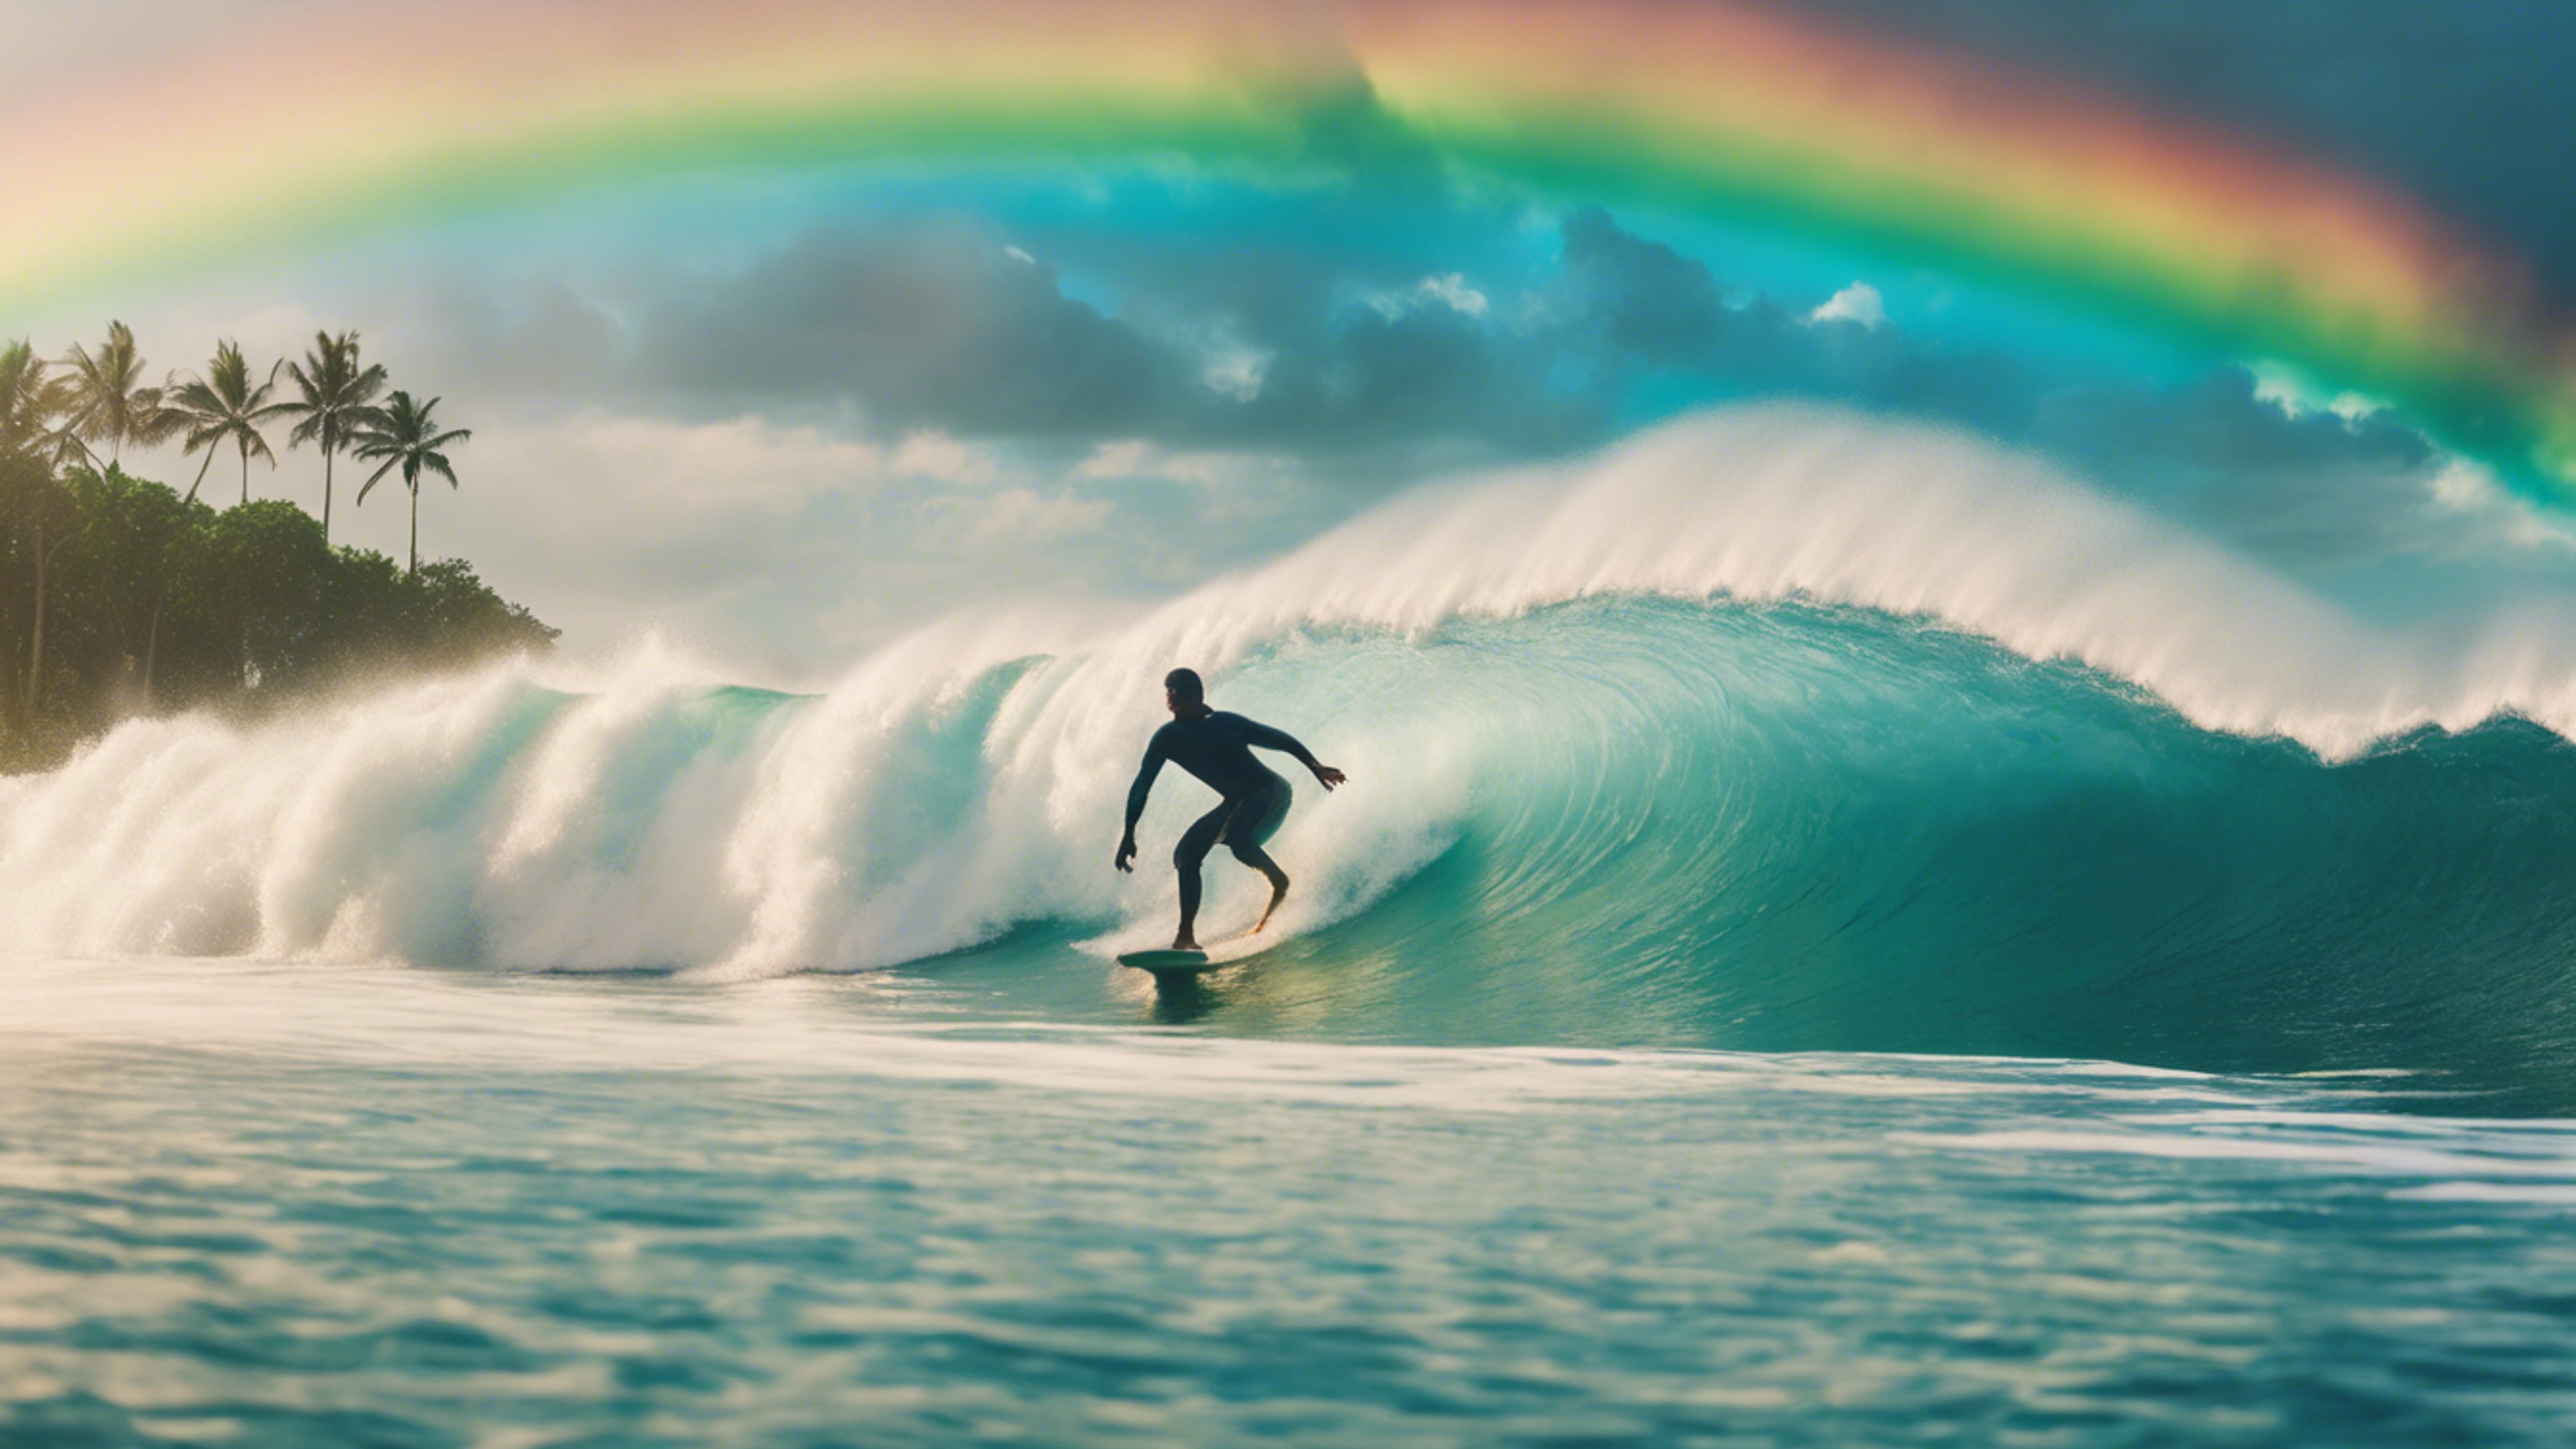 A spontaneous man surfing on a giant wave under a scintillating rainbow in a tropical ocean. Tapet[41deec9b24da40d39c6d]